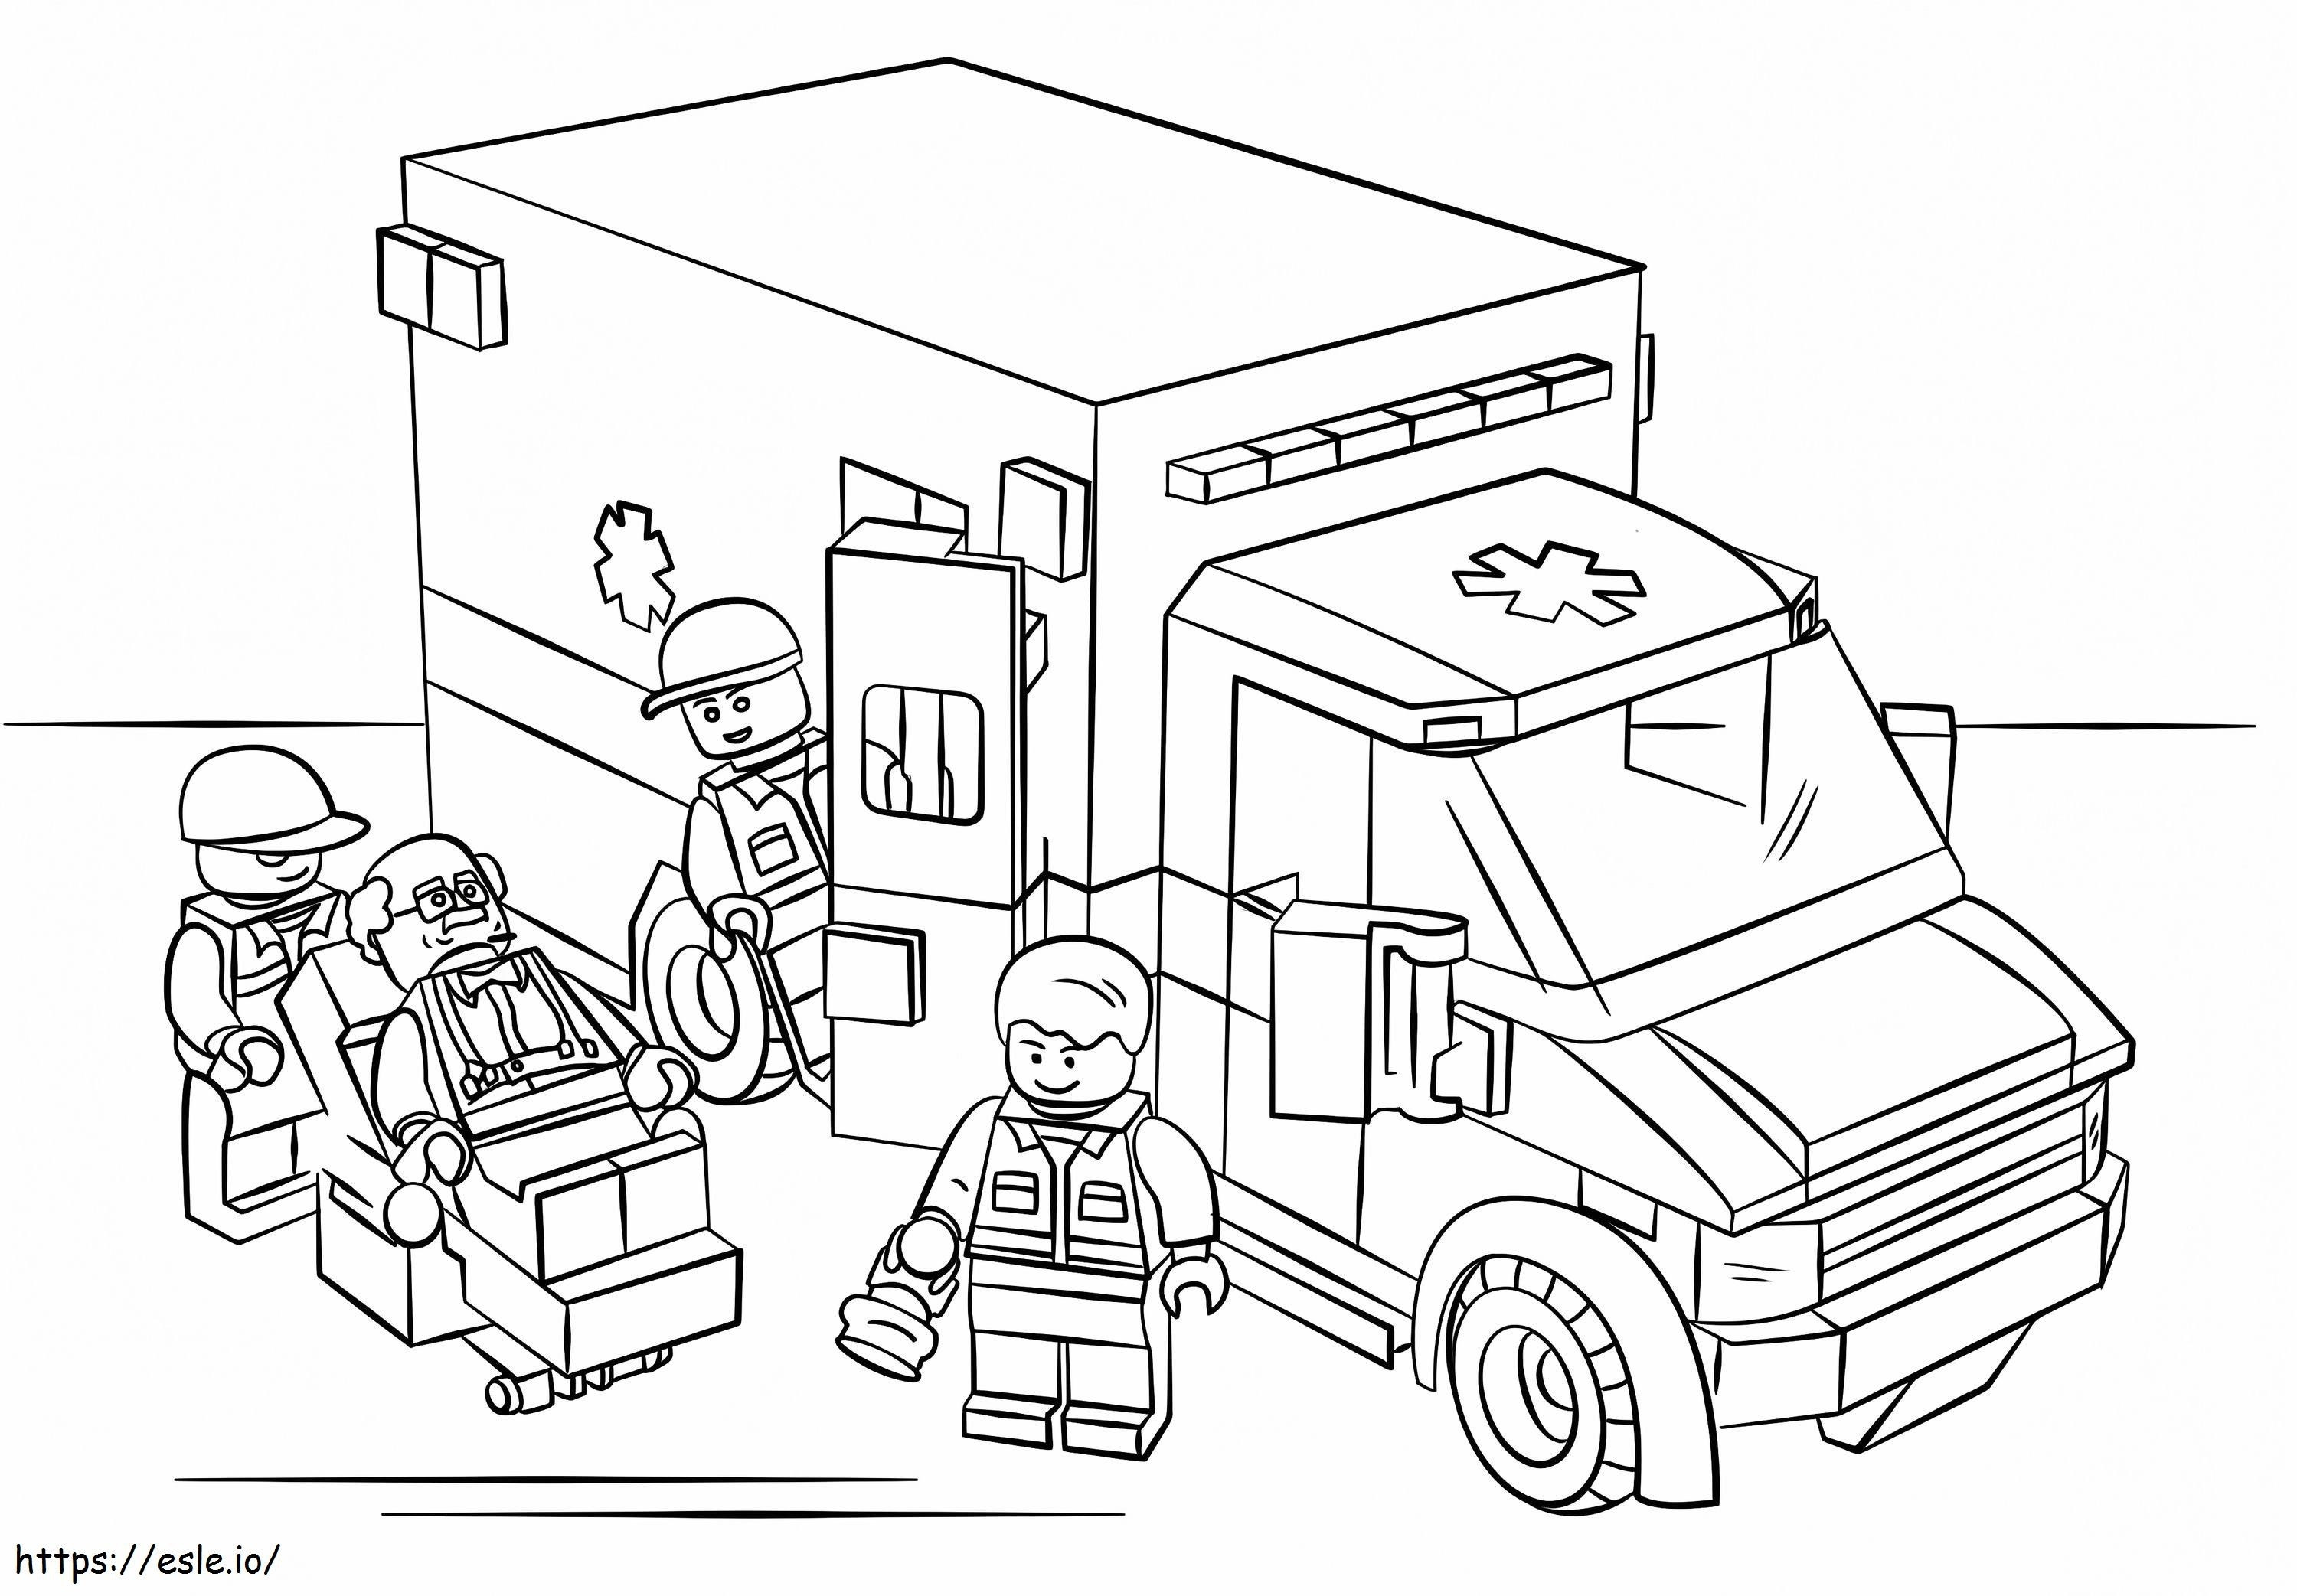 Lego City Ambulance coloring page